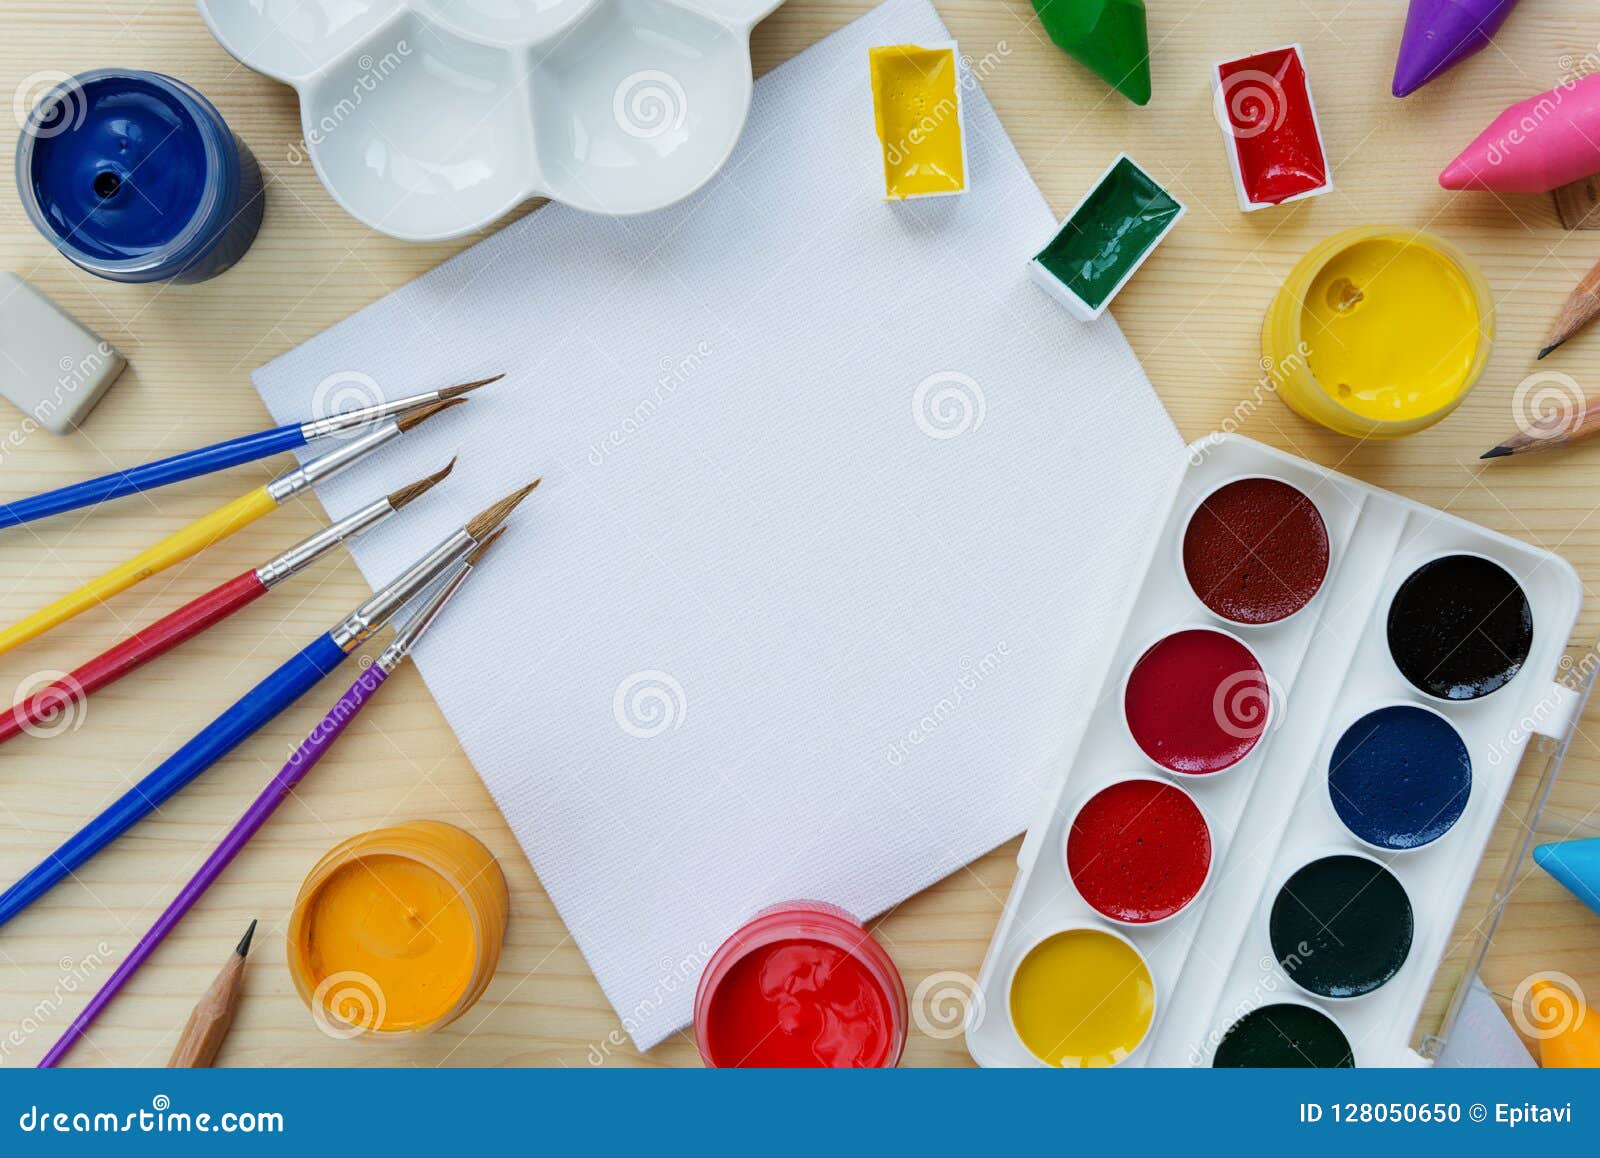 Concept of Artistic Creativity Stock Photo - Image of multicolored ...